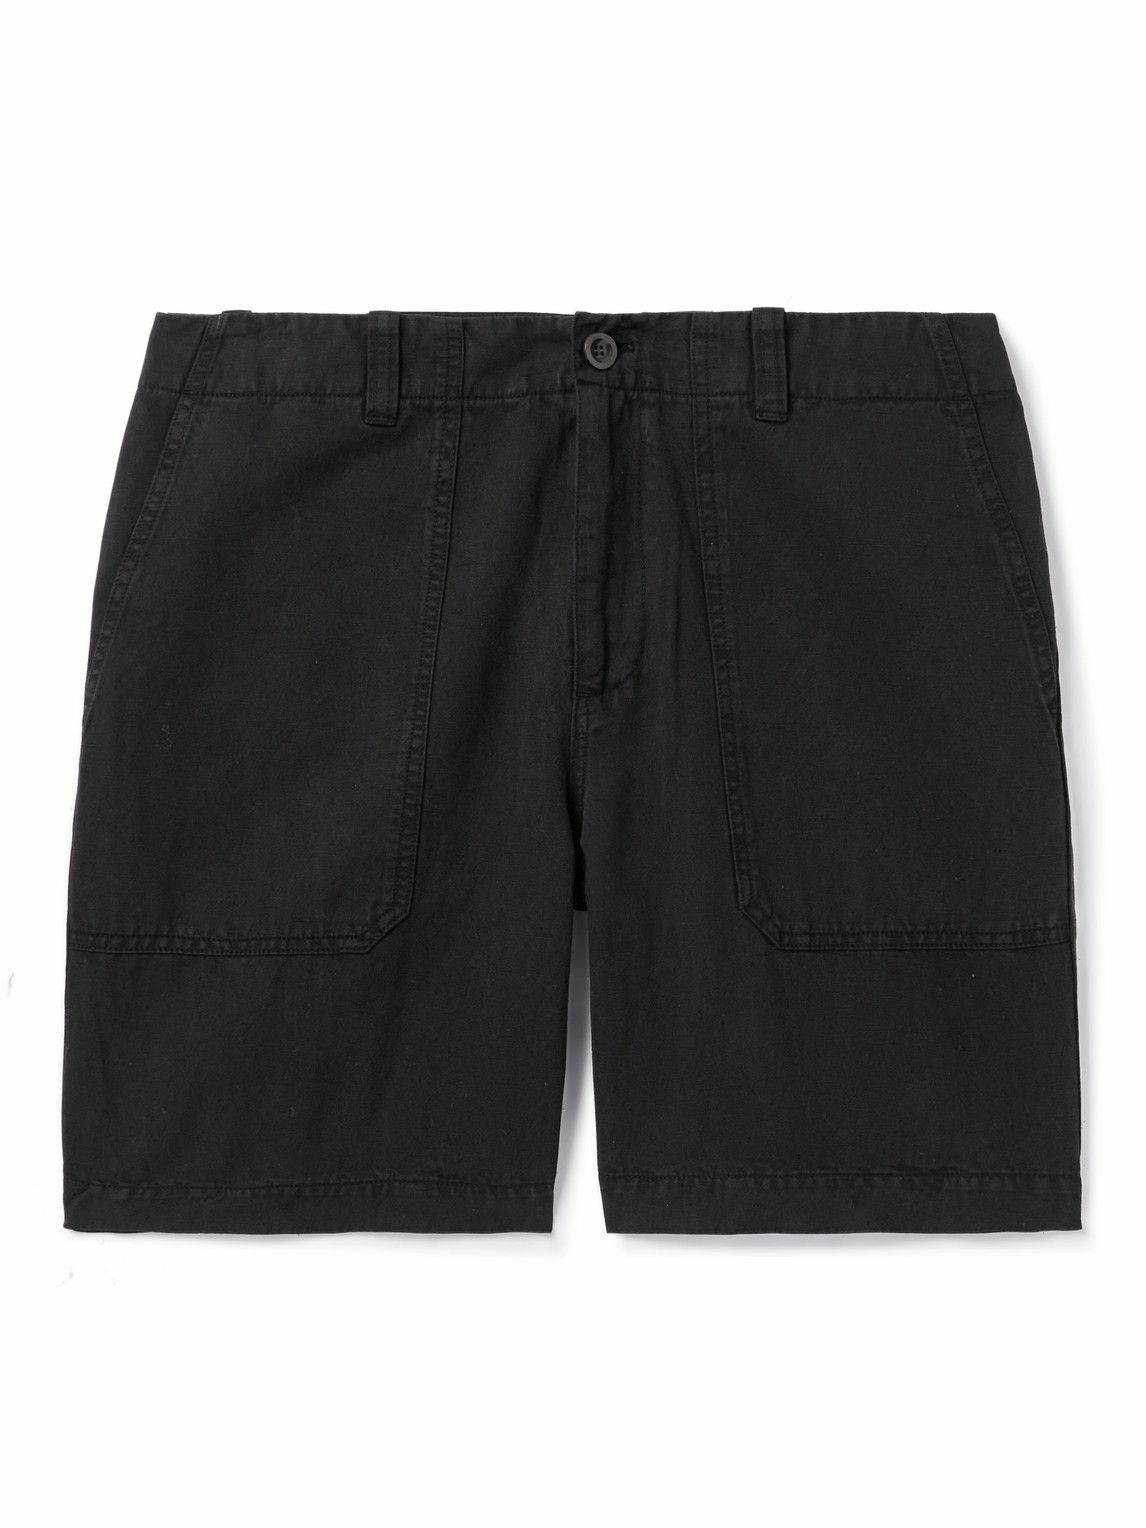 MSGM pleated cotton shorts - Neutrals